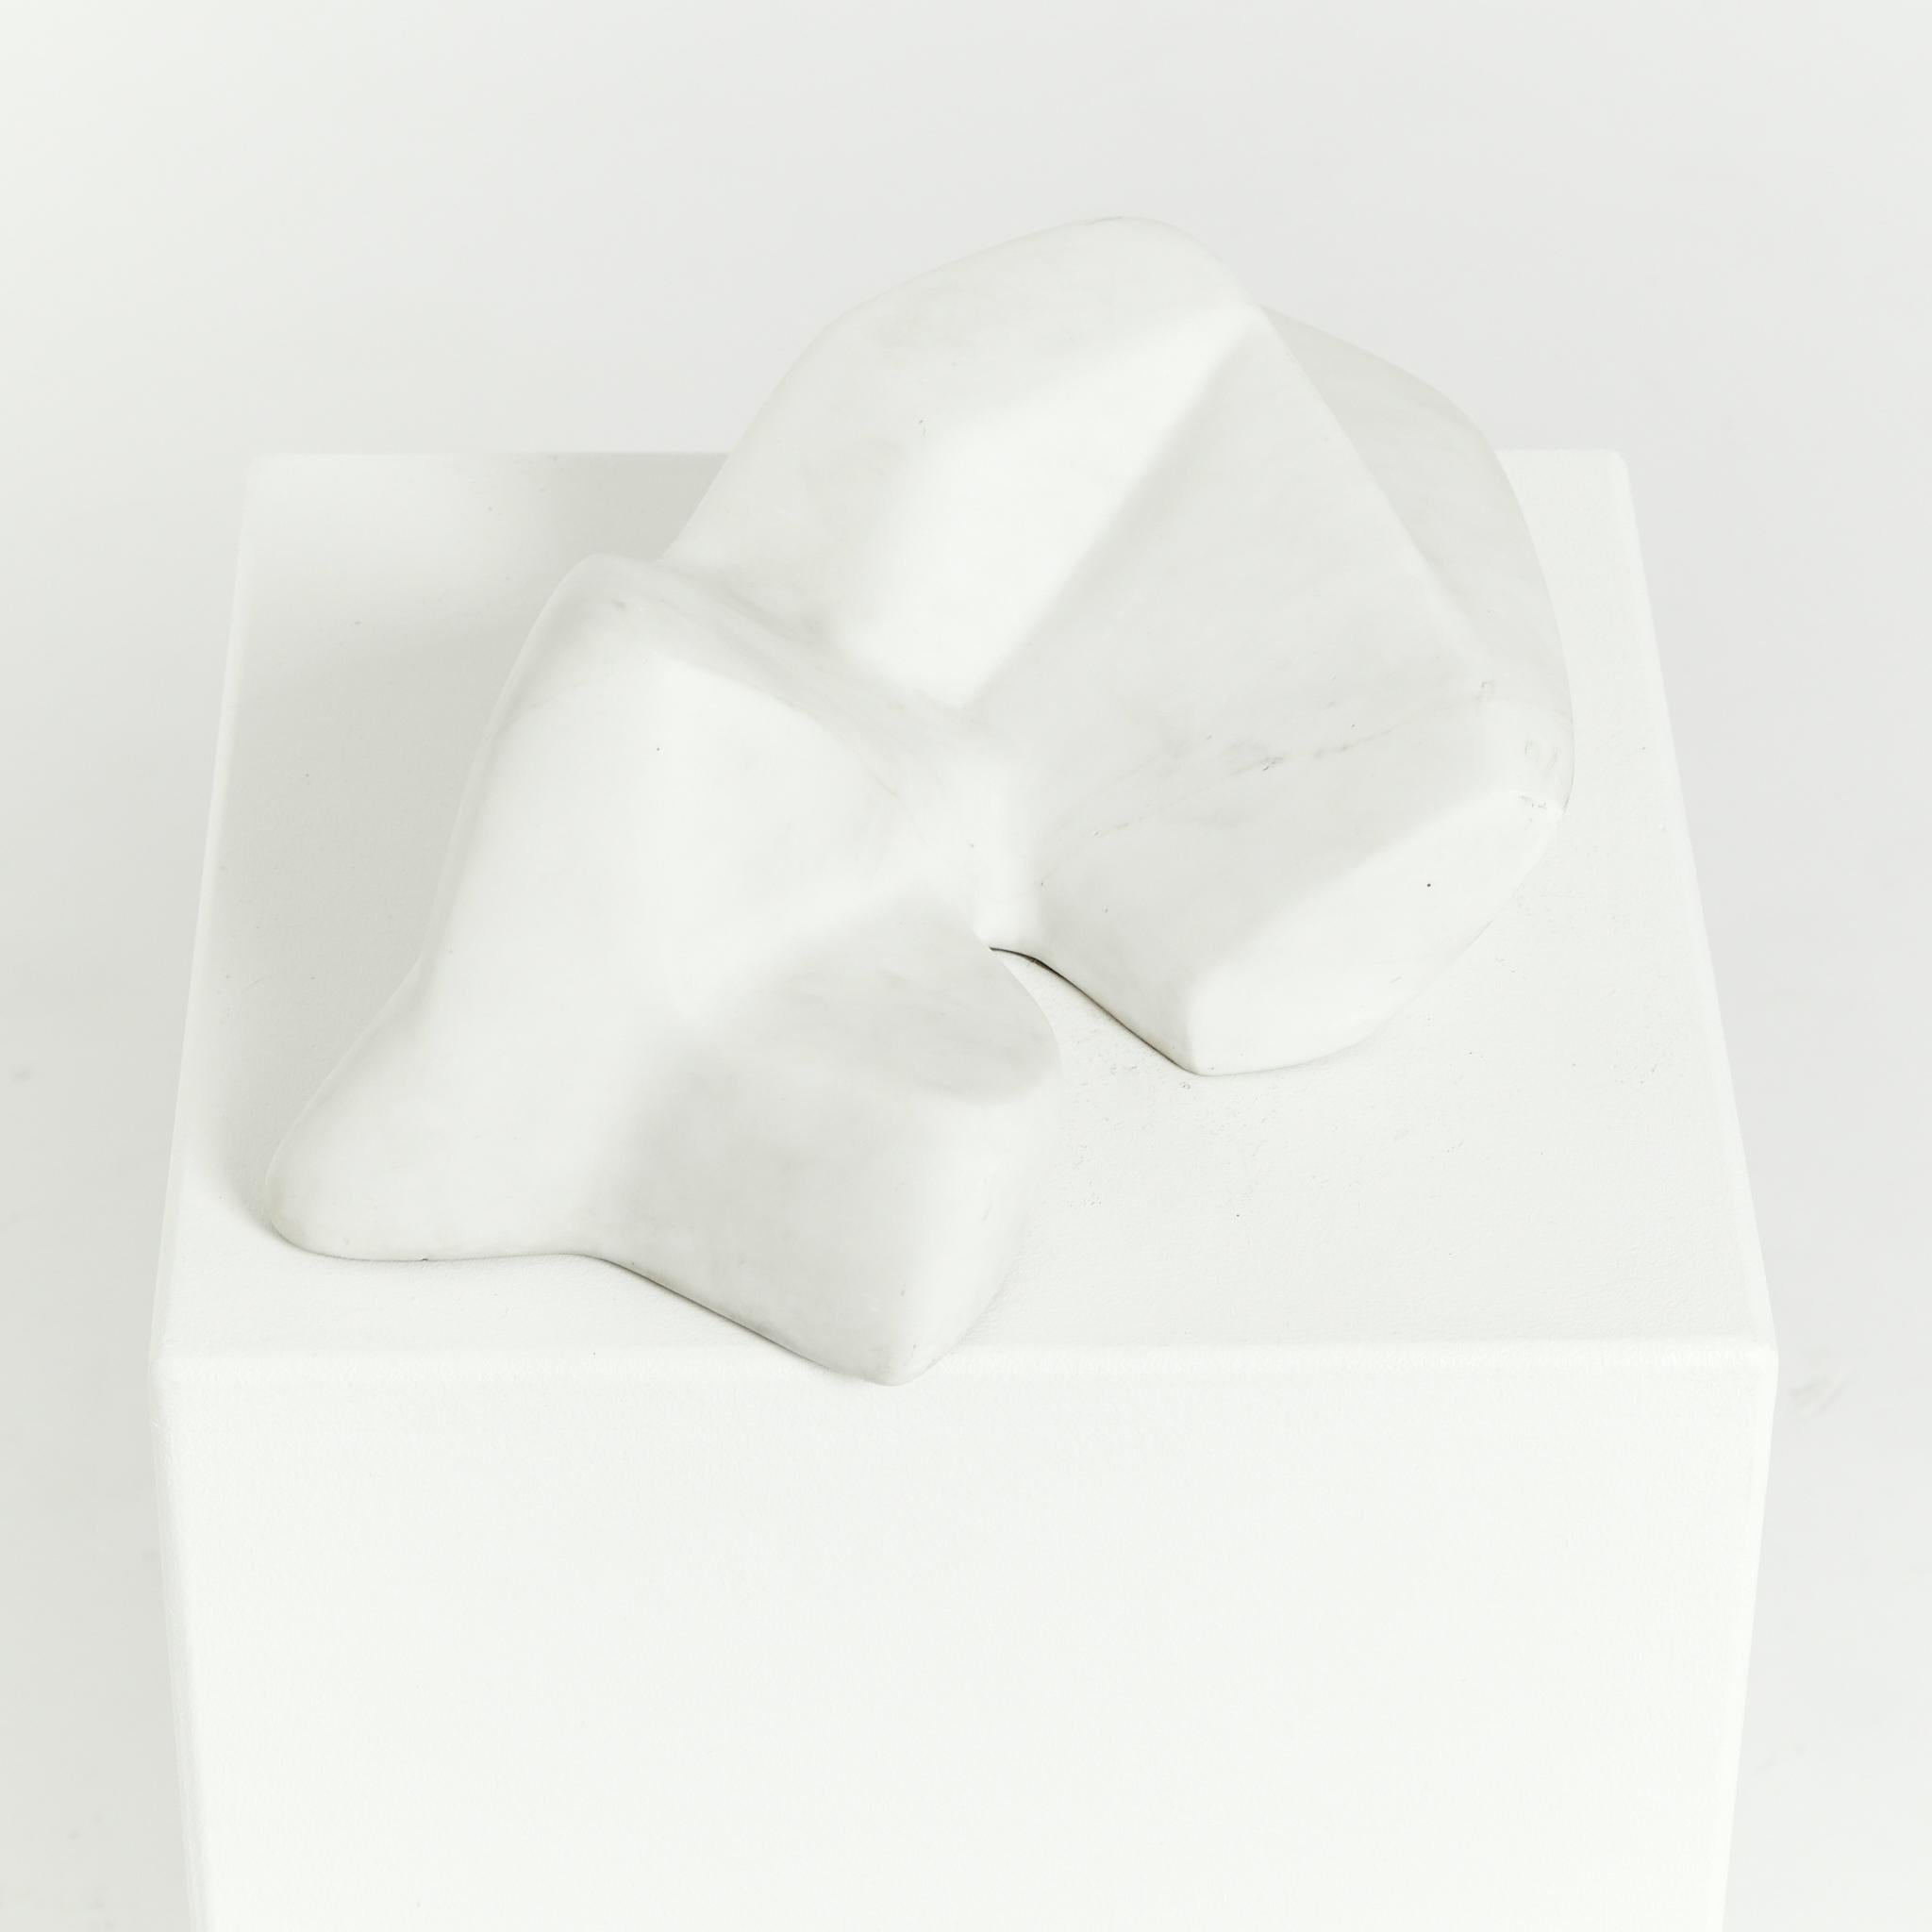 Angular Abstract Sculpture in Carrara Marble 10